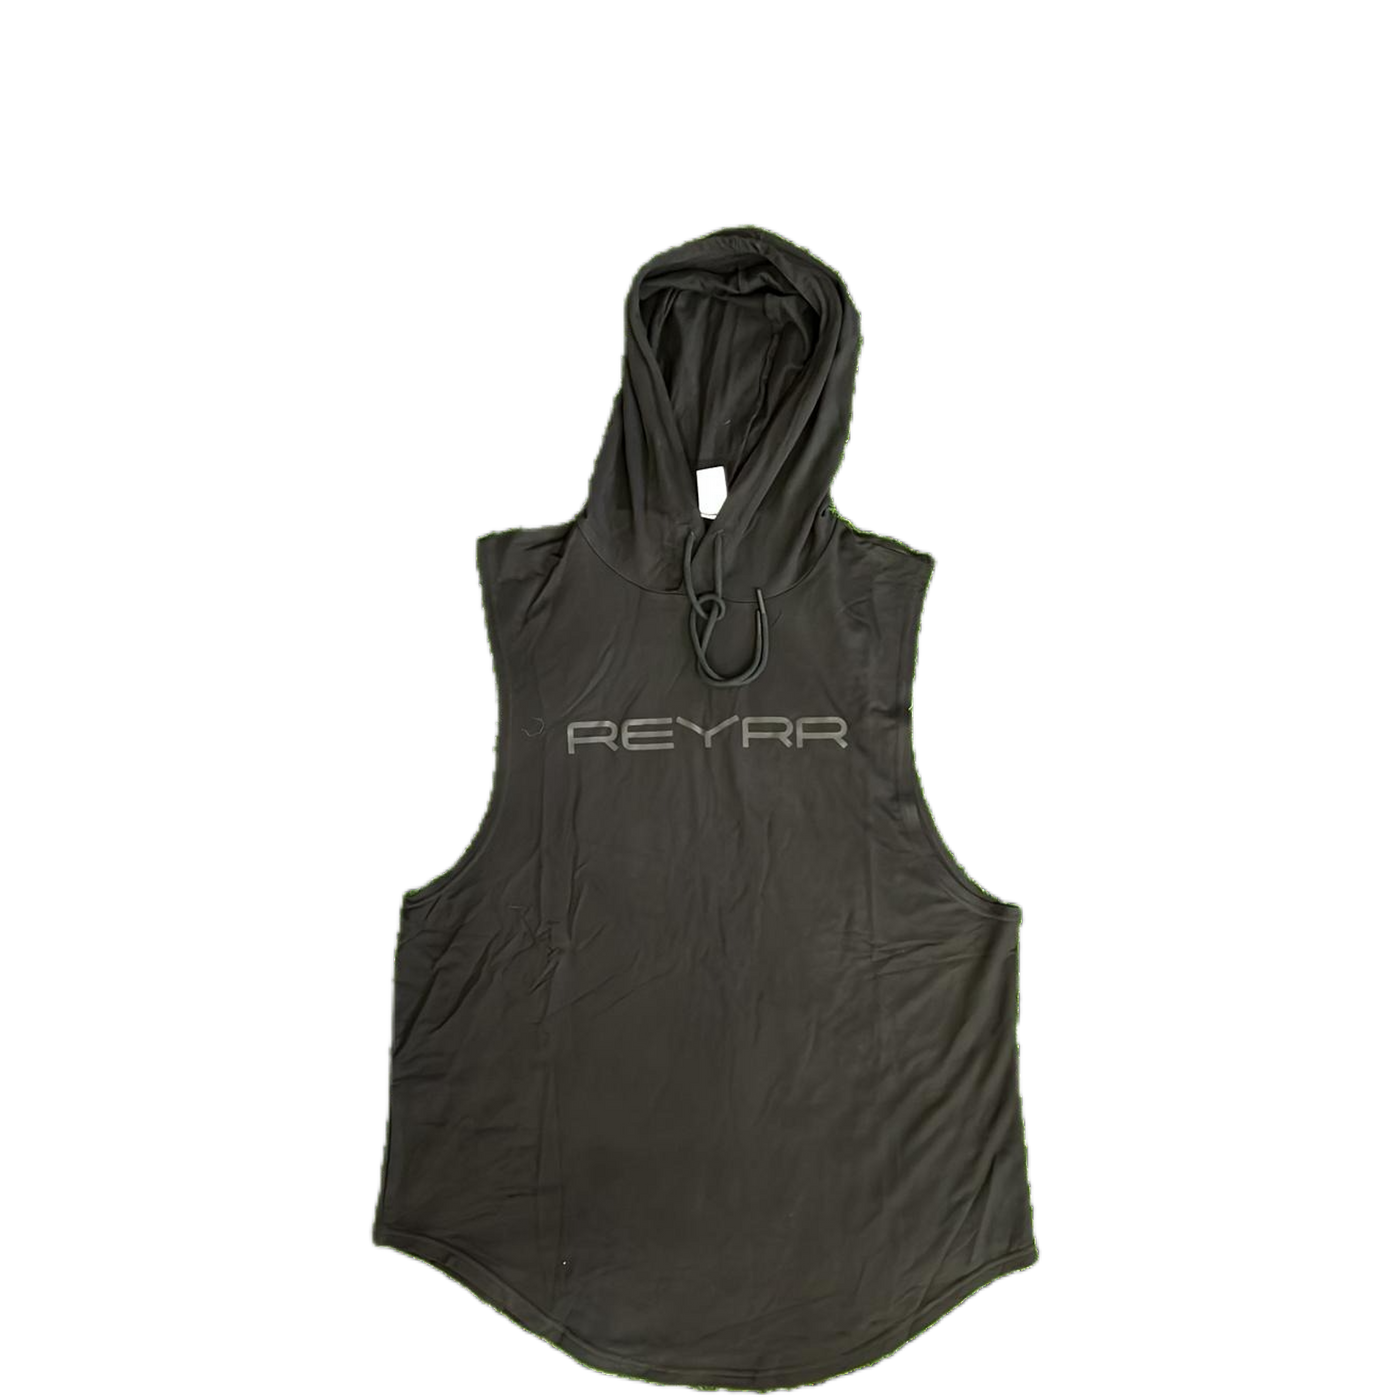 Reyrr Sleeveless Light gameday Hoodie - Premium  from Reyrr Athletics - Shop now at Reyrr Athletics